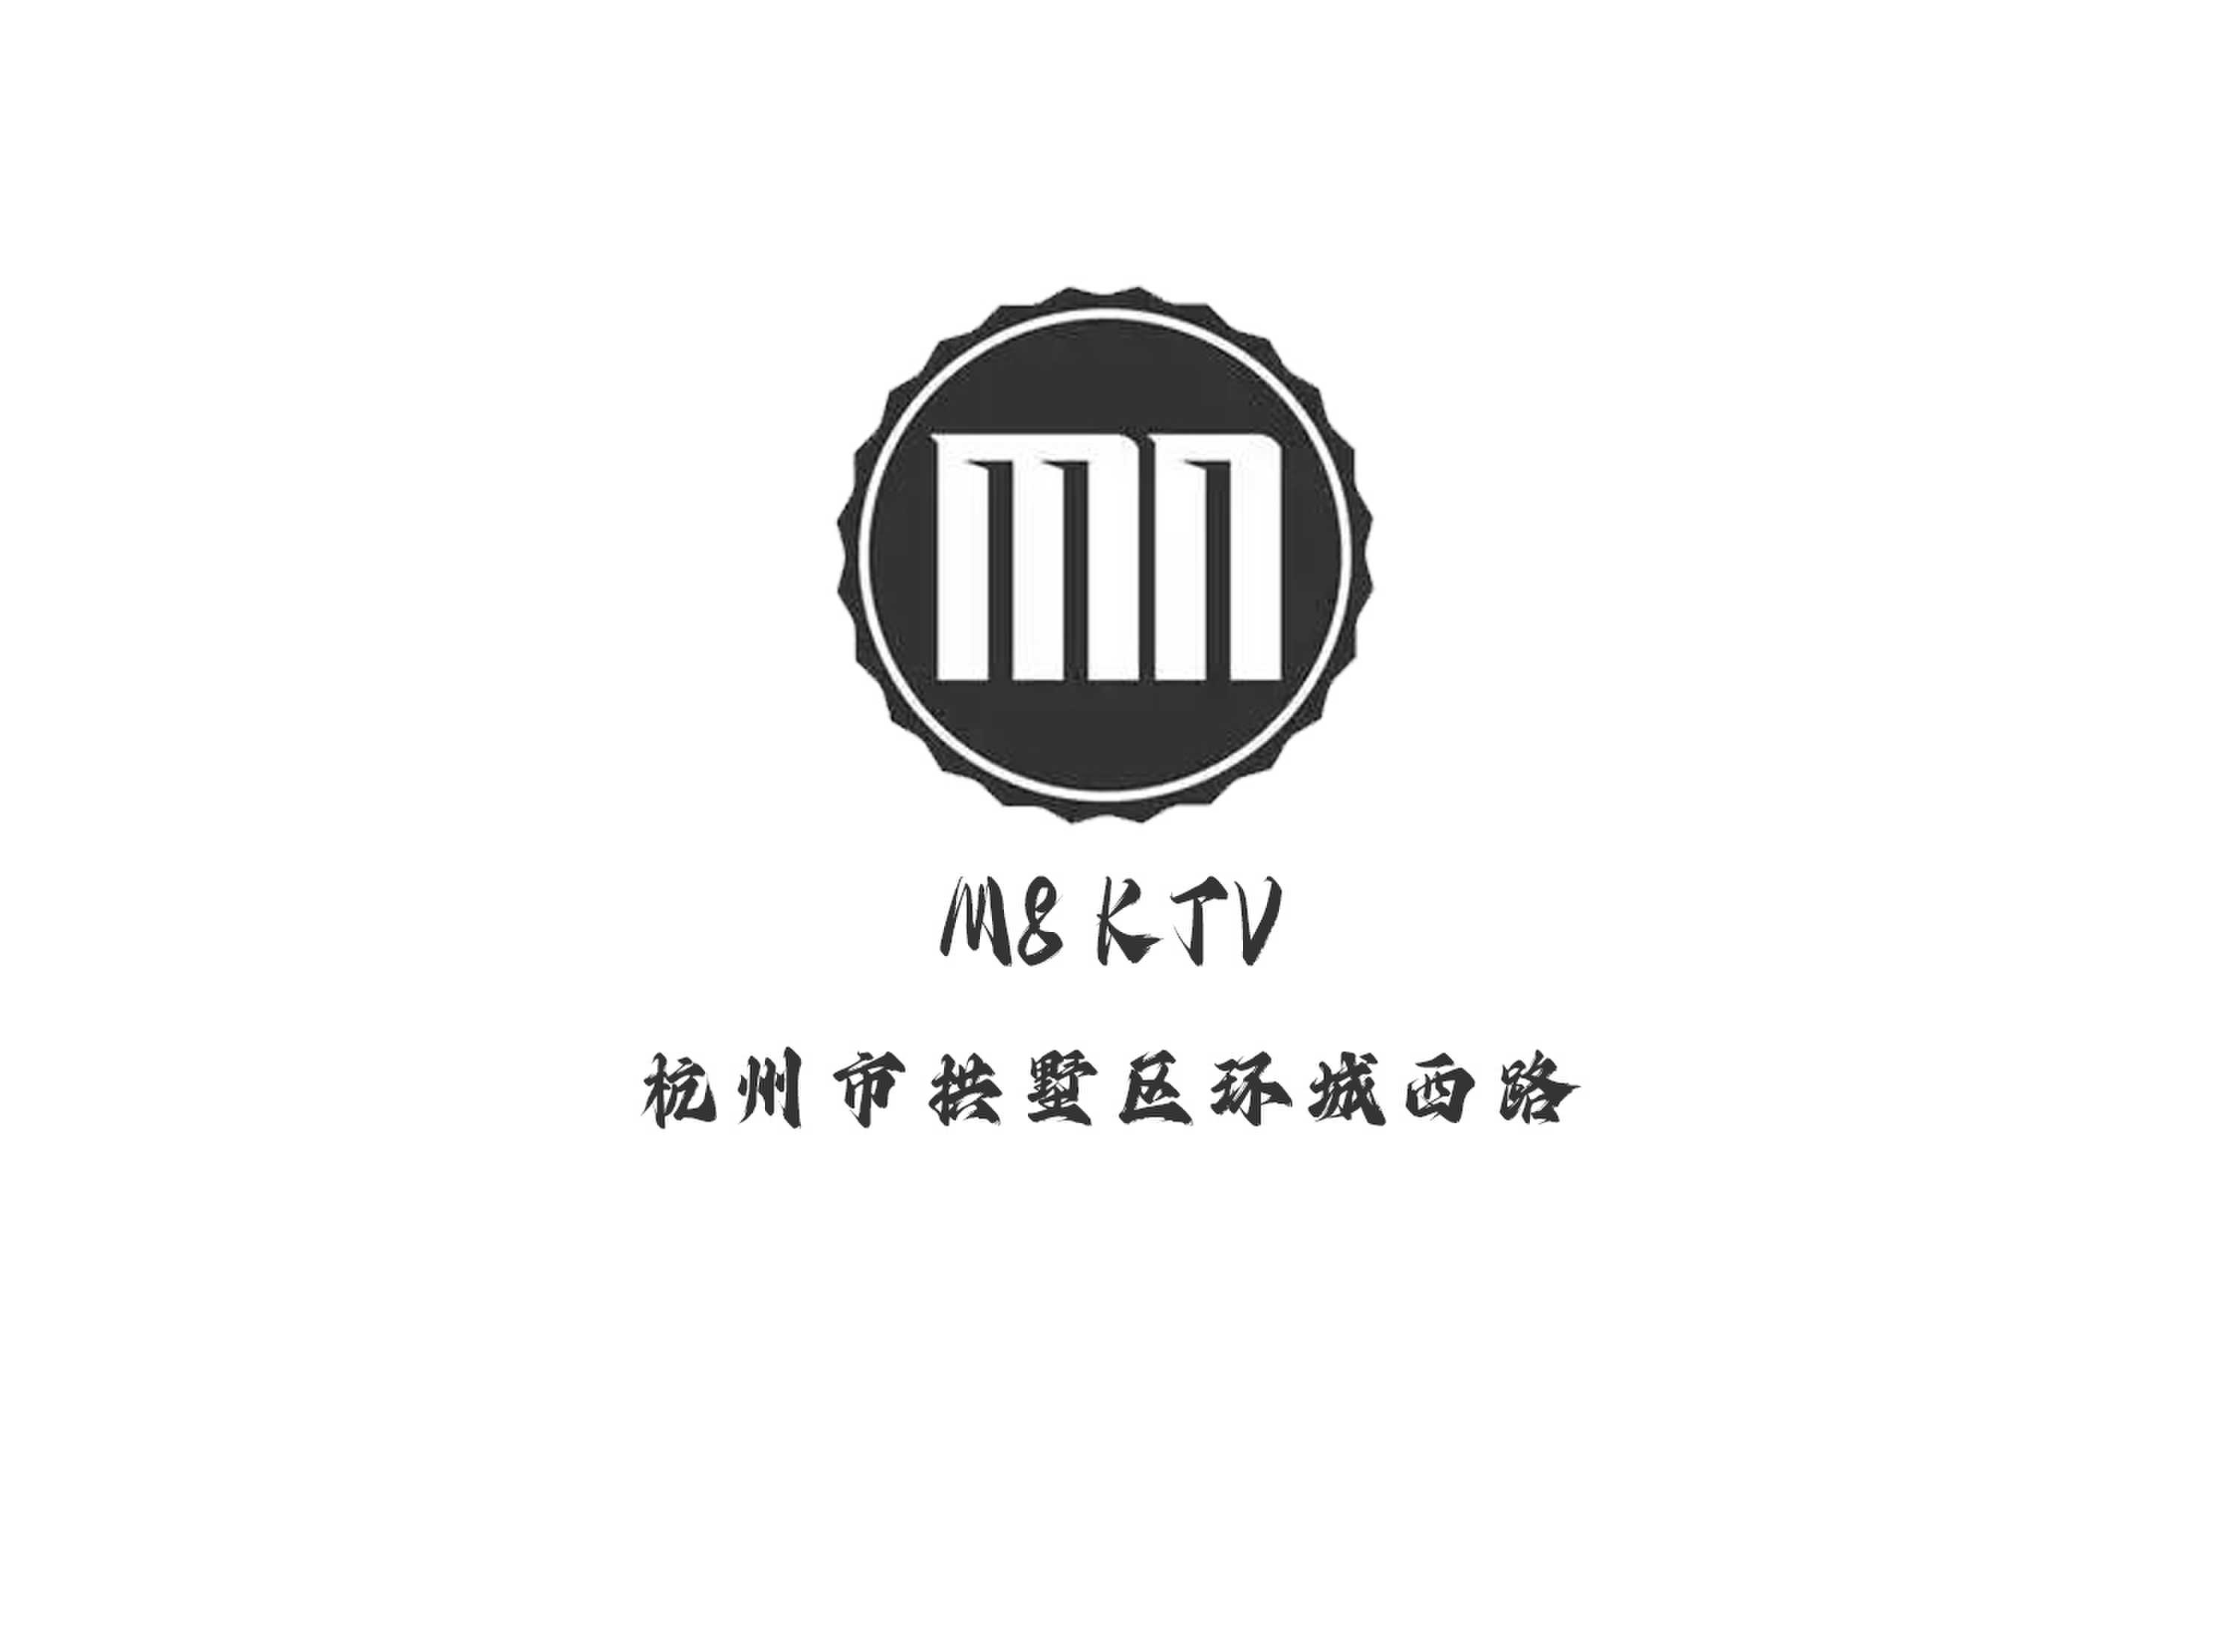 M8 KTV